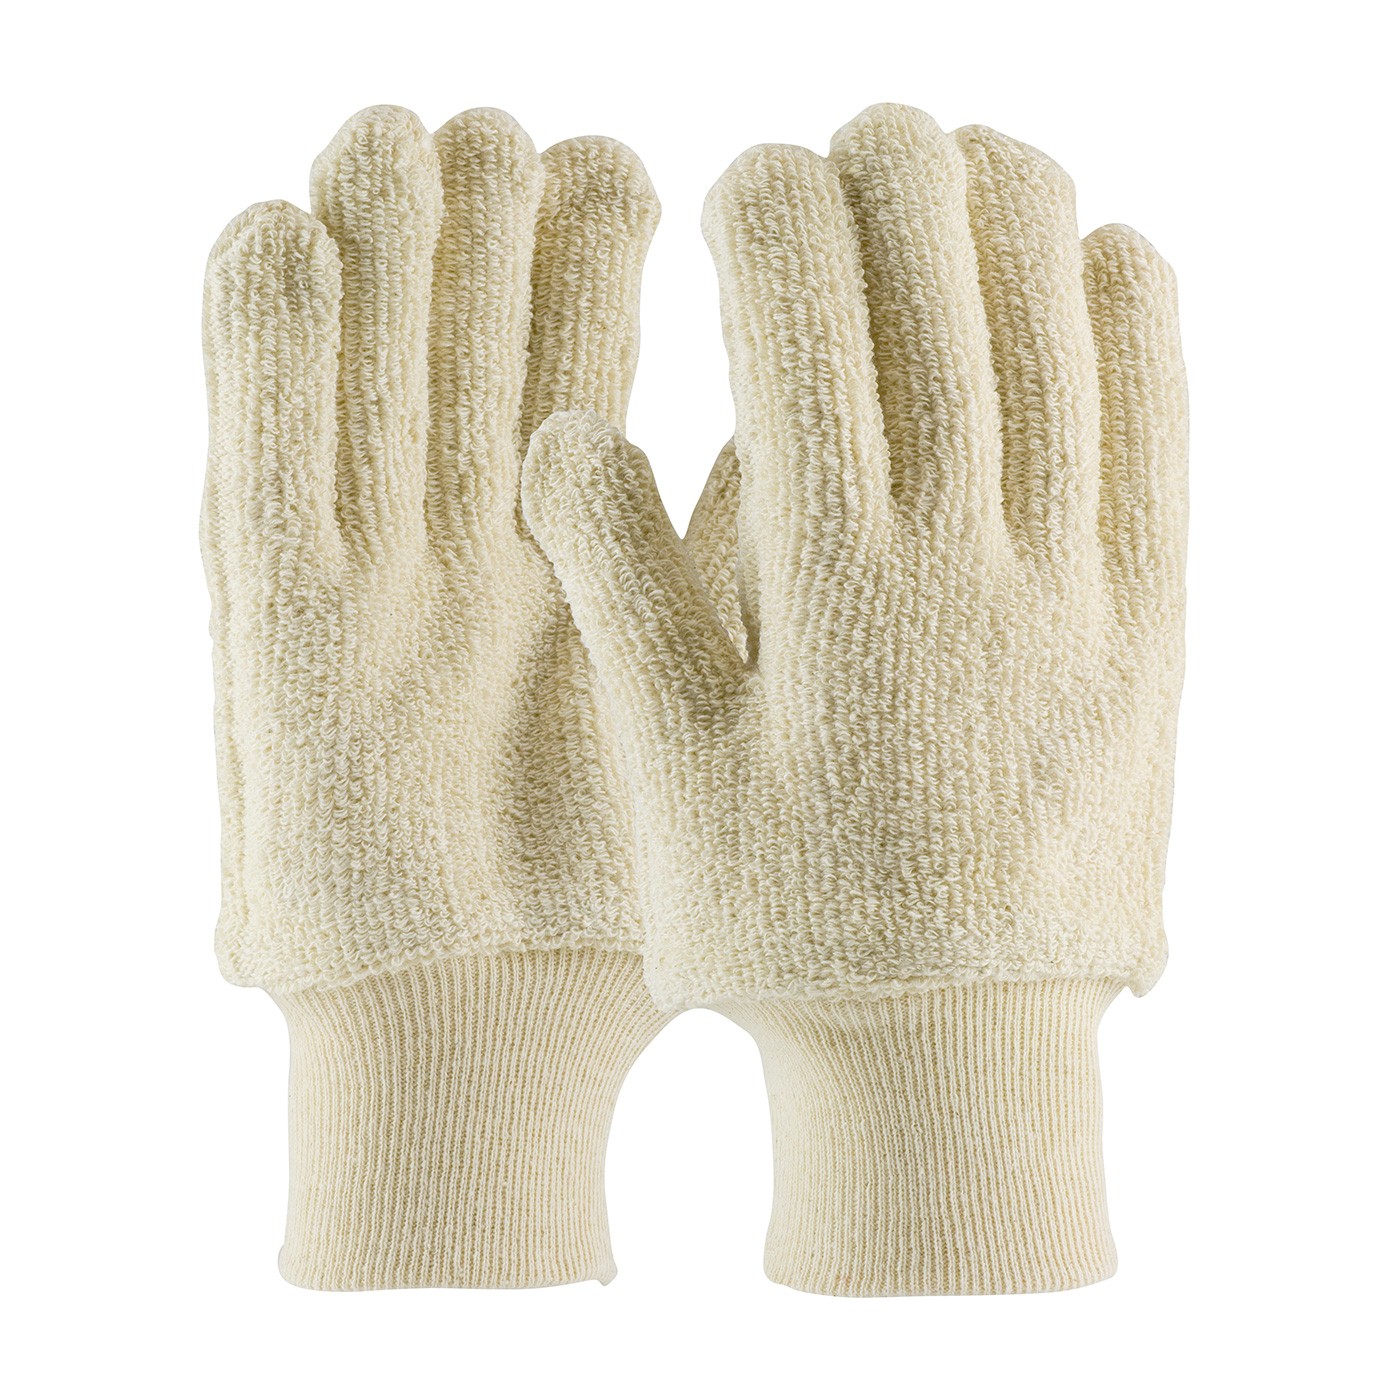 PIP® Terry Cloth Seamless Knit Glove - 24 oz  (#42-C700)